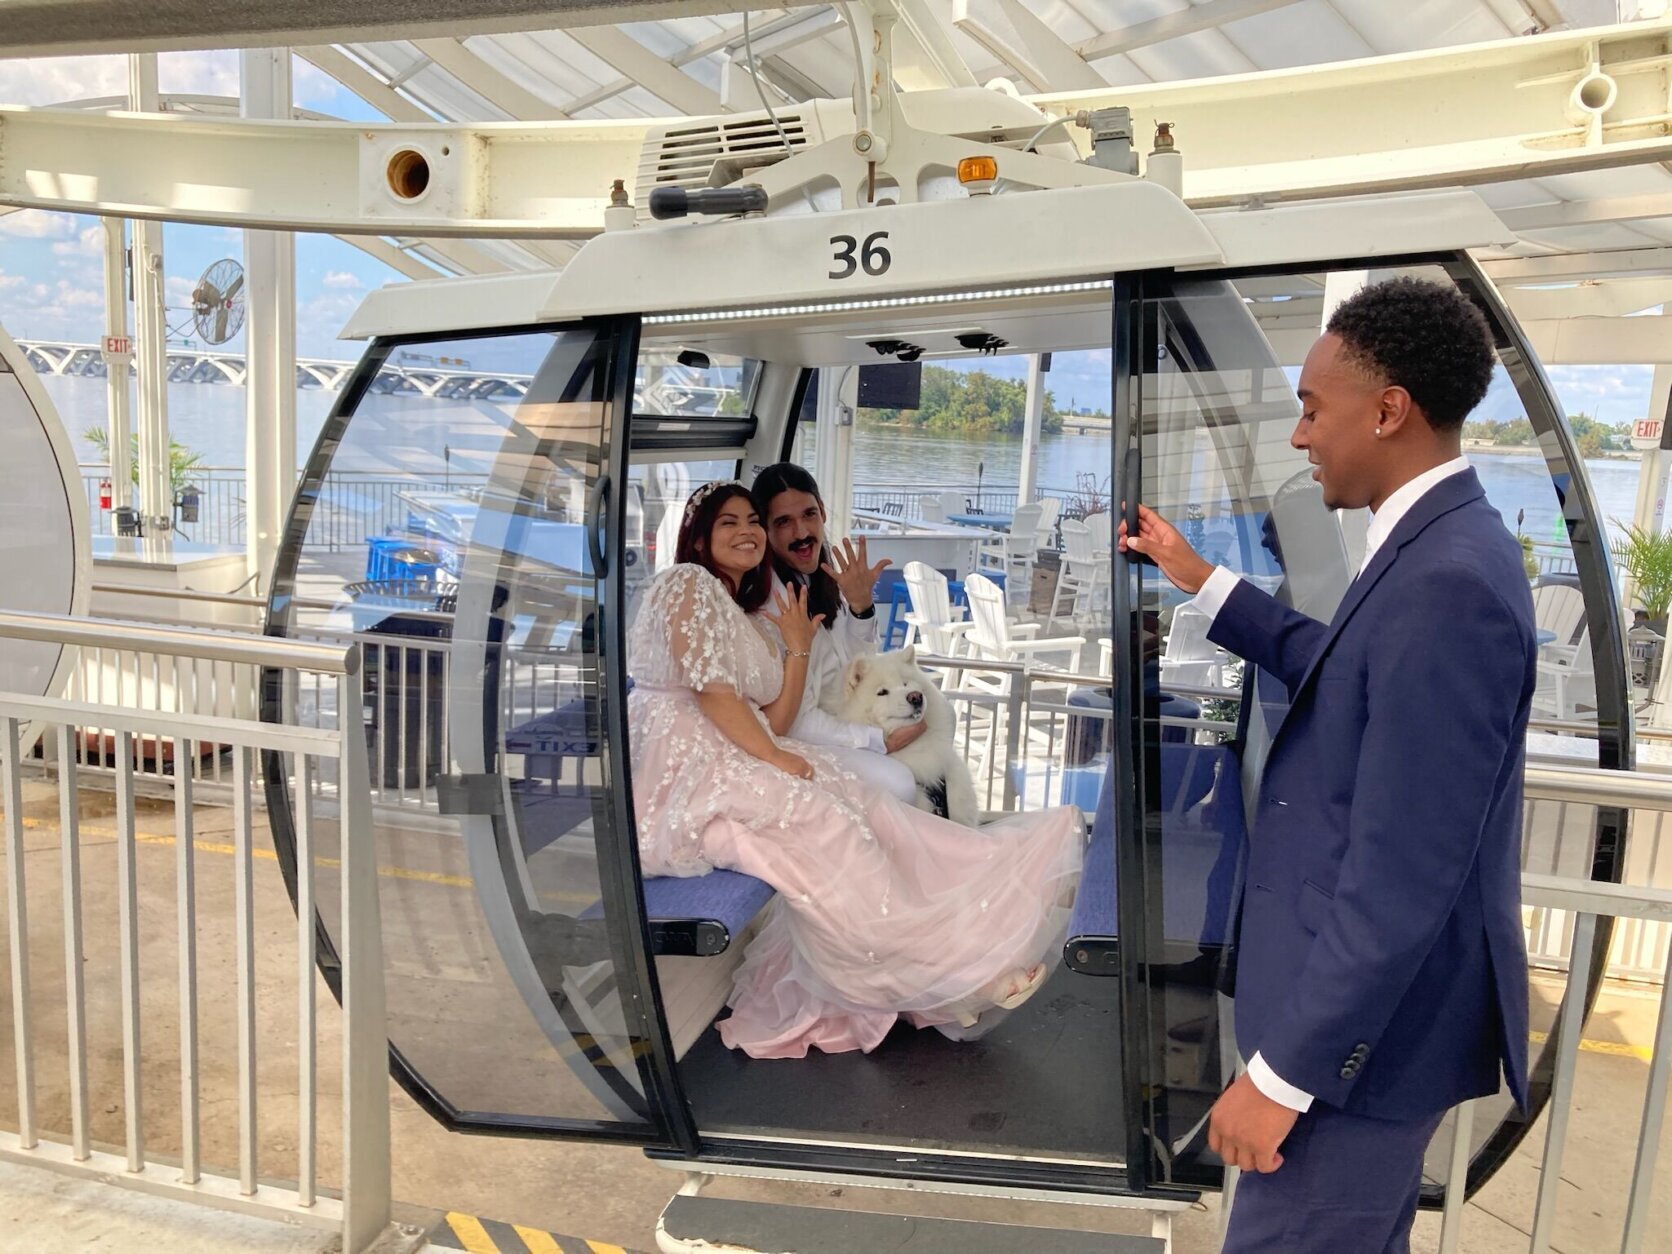 Newlyweds inside Ferris wheel gondola